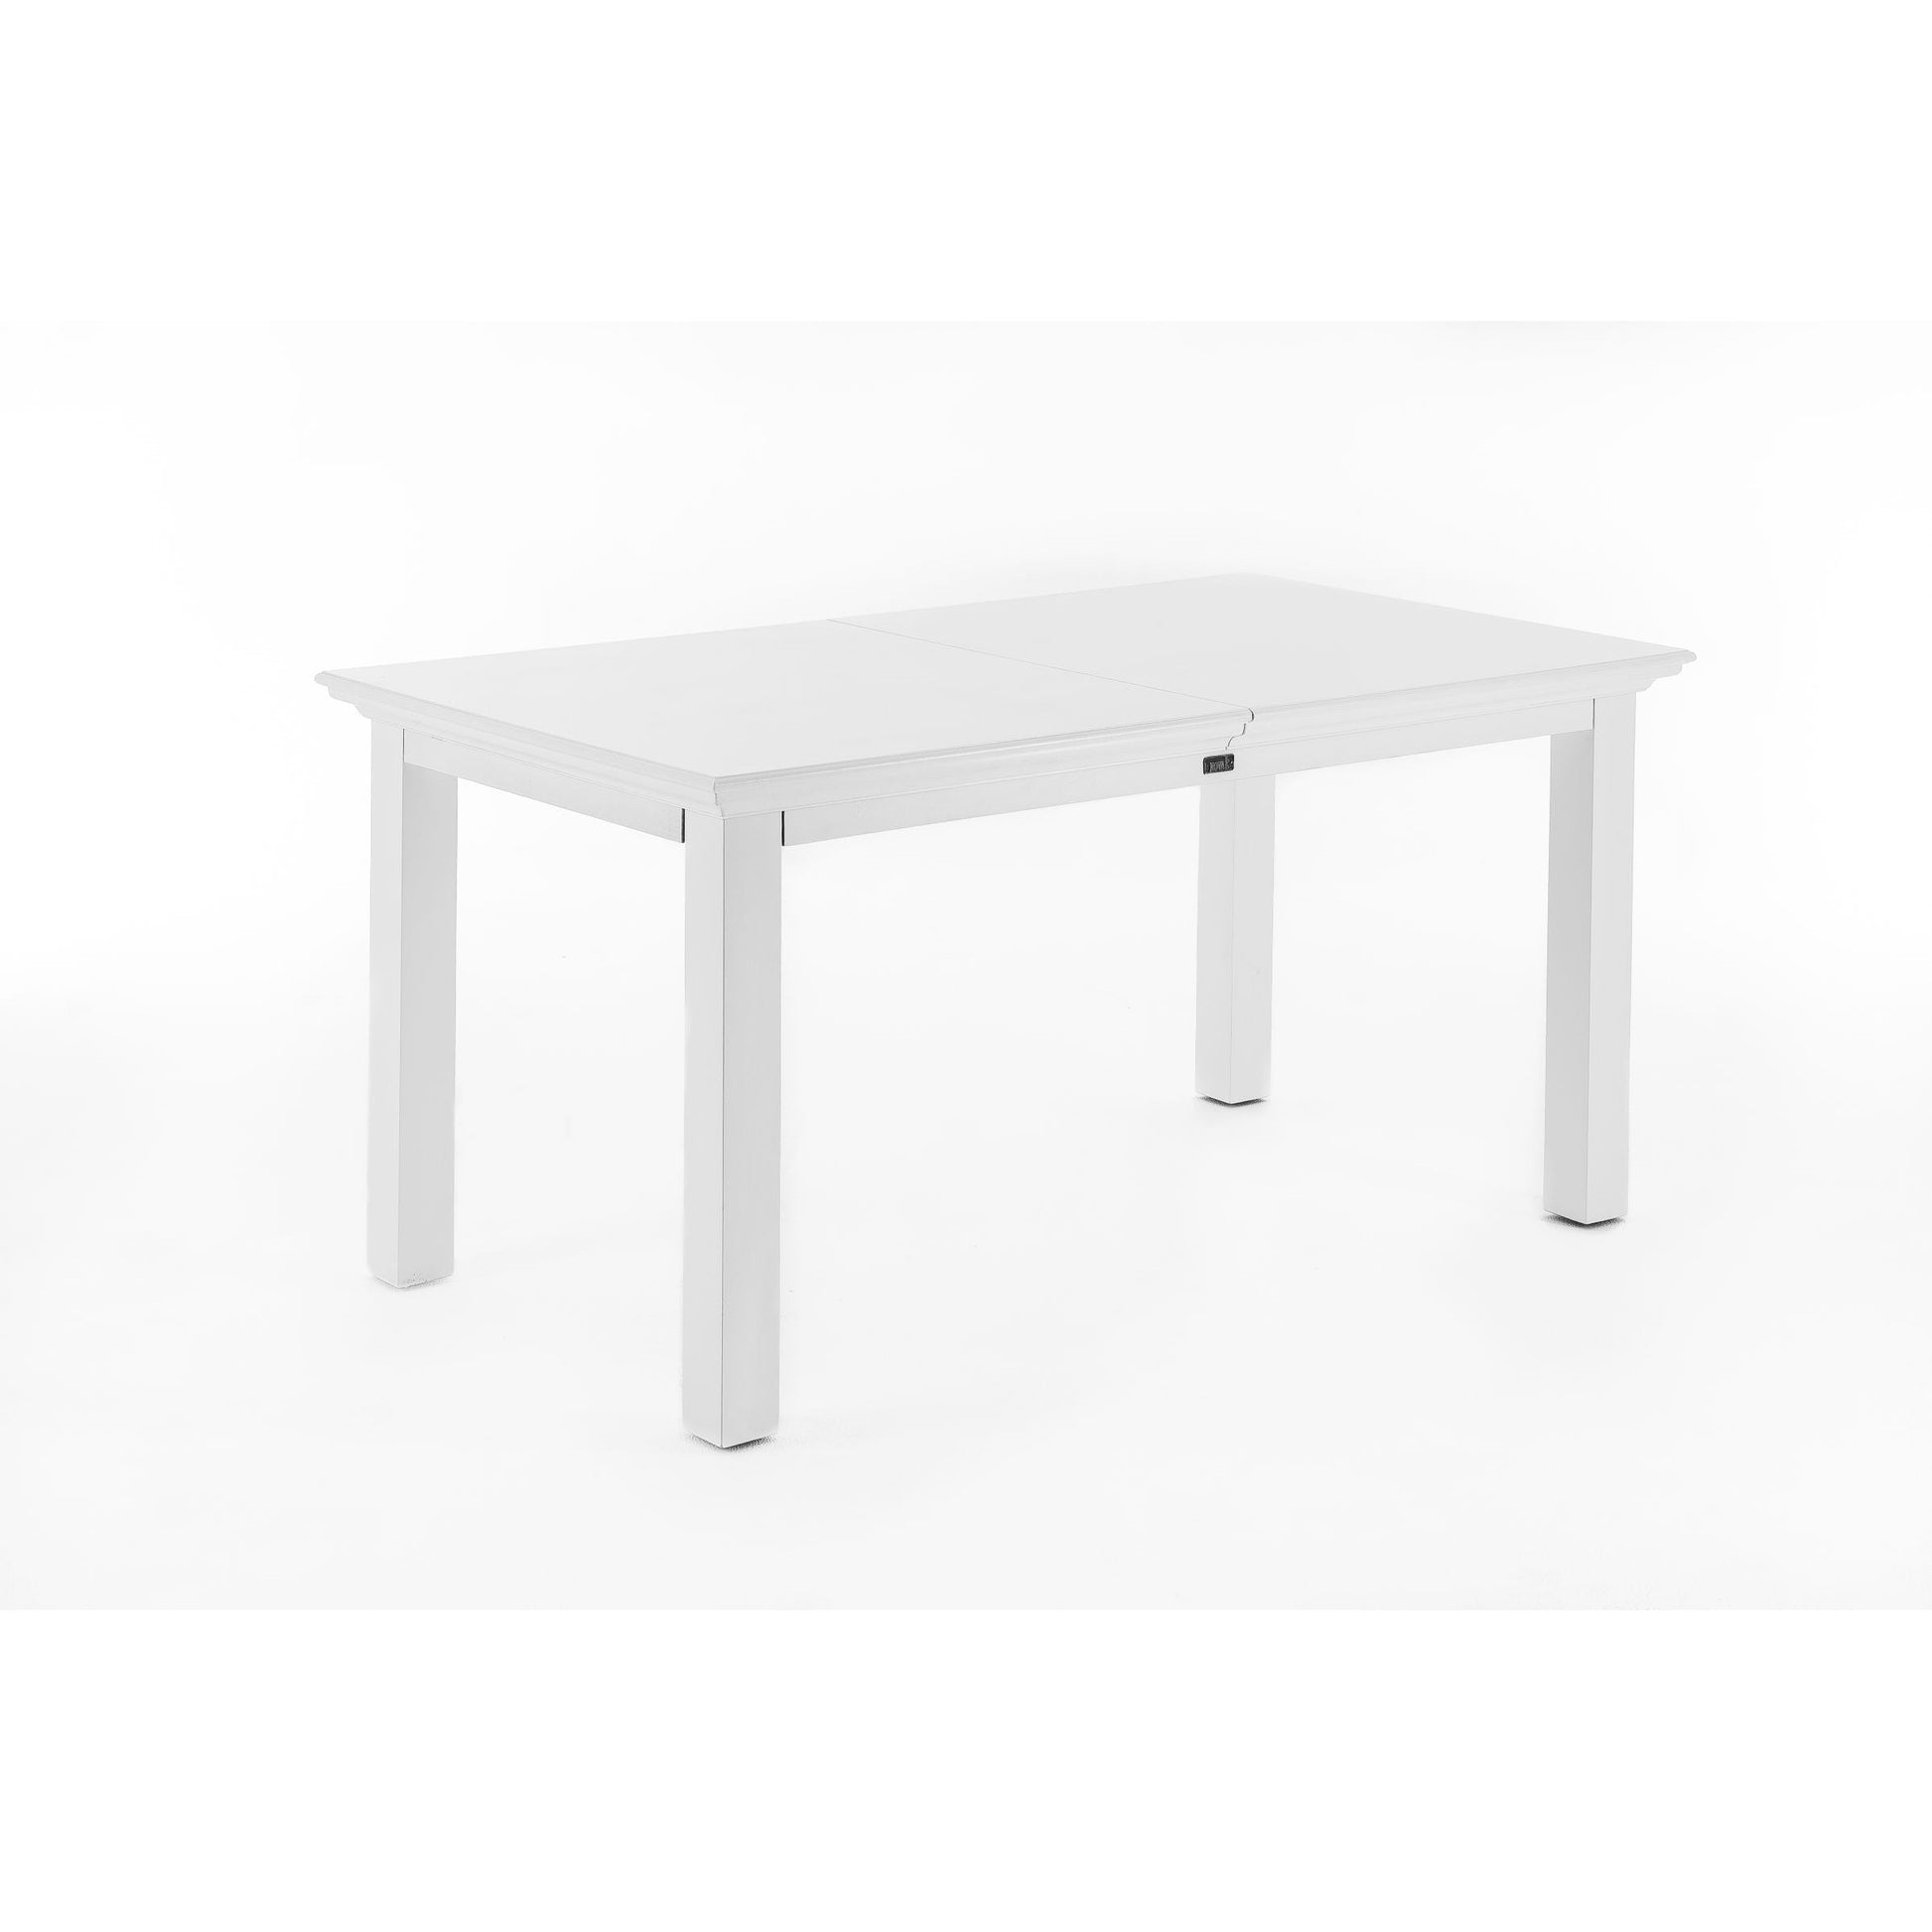 NovaSolo Halifax 79" x 35" Classic White Mahogany Extendable Dining Table